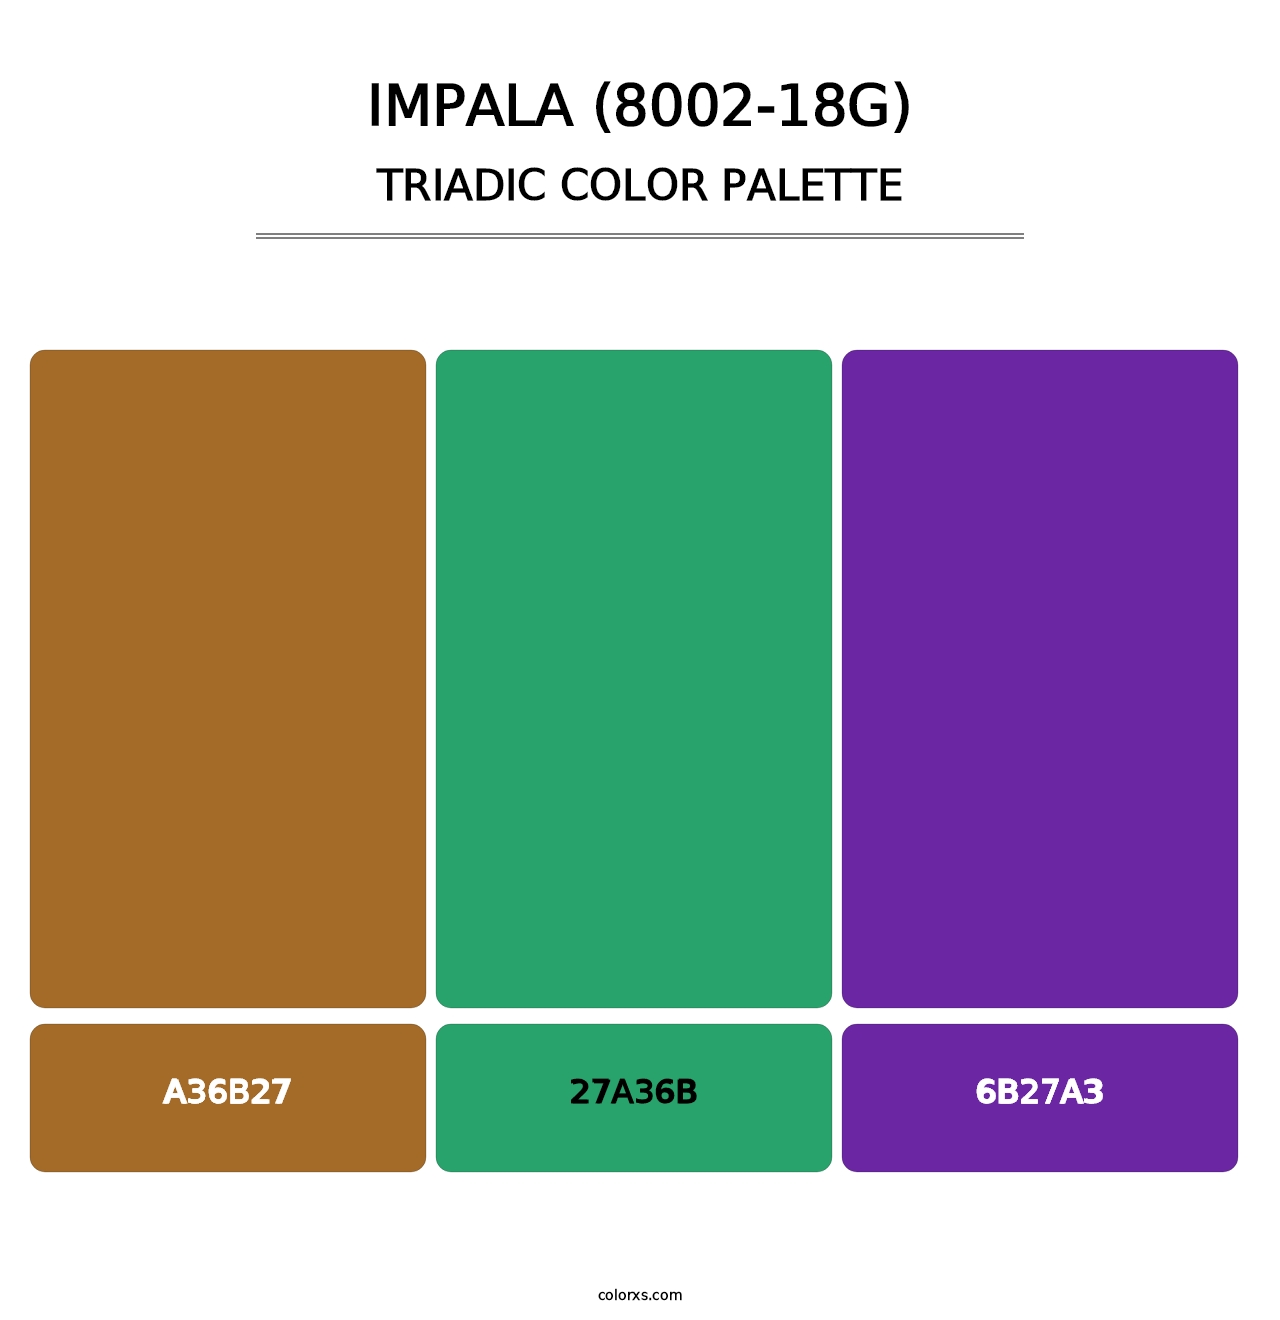 Impala (8002-18G) - Triadic Color Palette